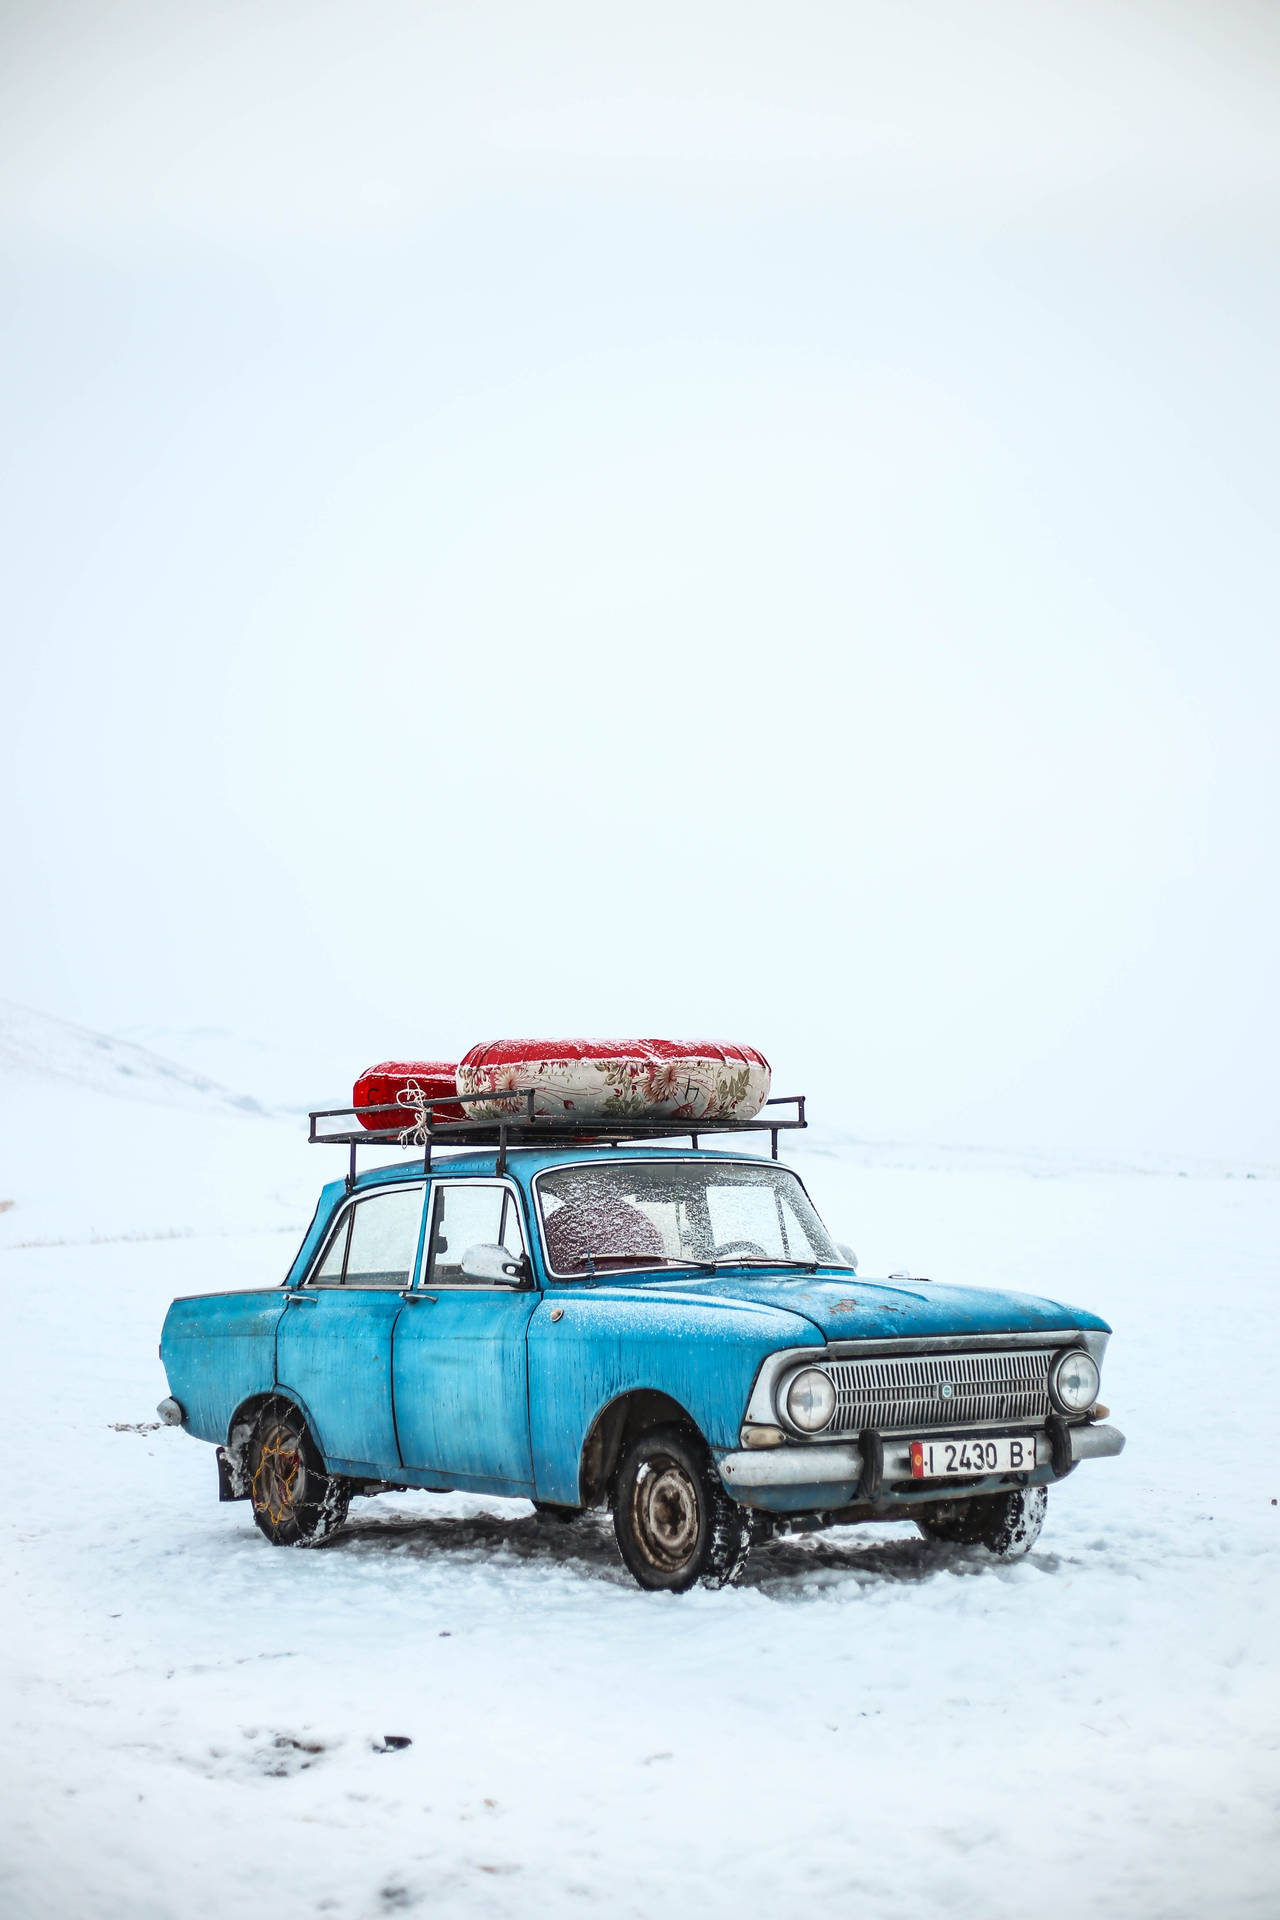 Kyrgyzstan Winter Blue Car Background